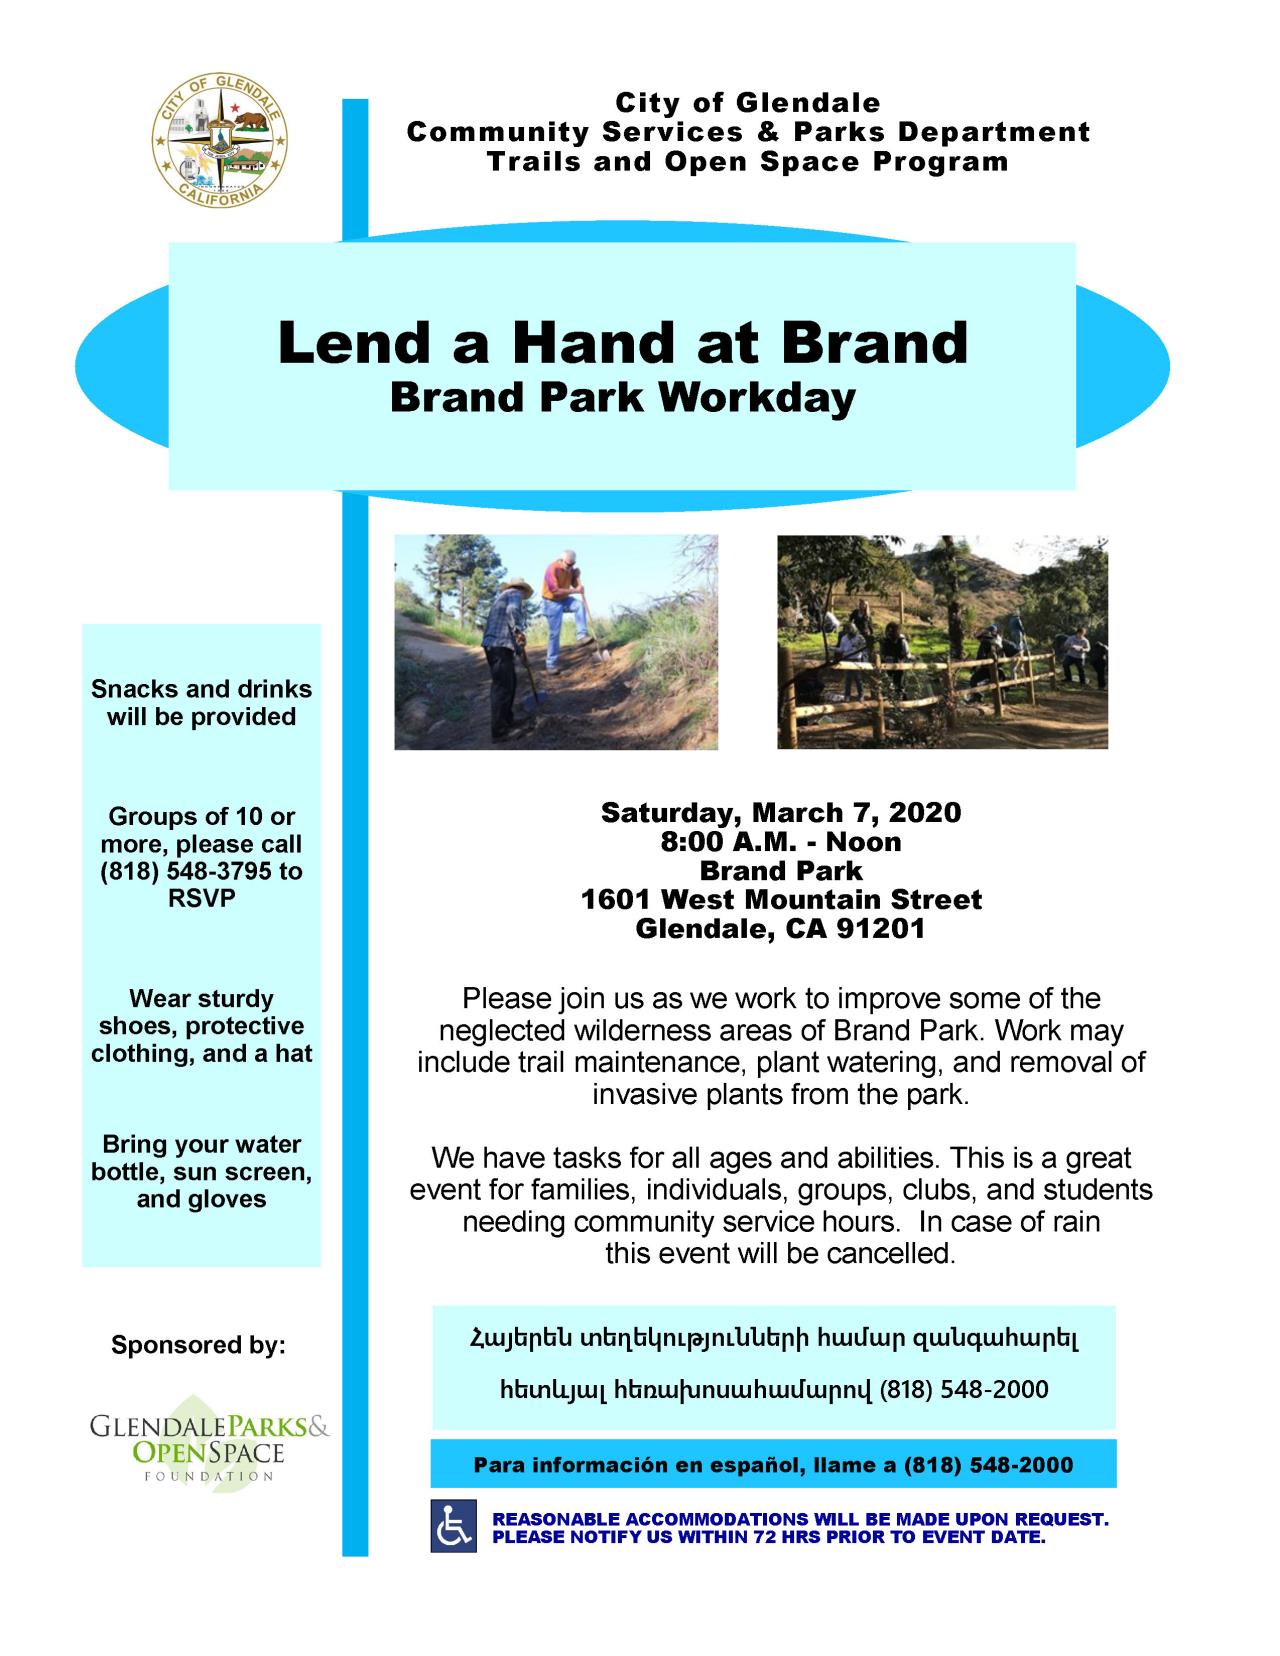 Lend a Hand at Brand Mar 7